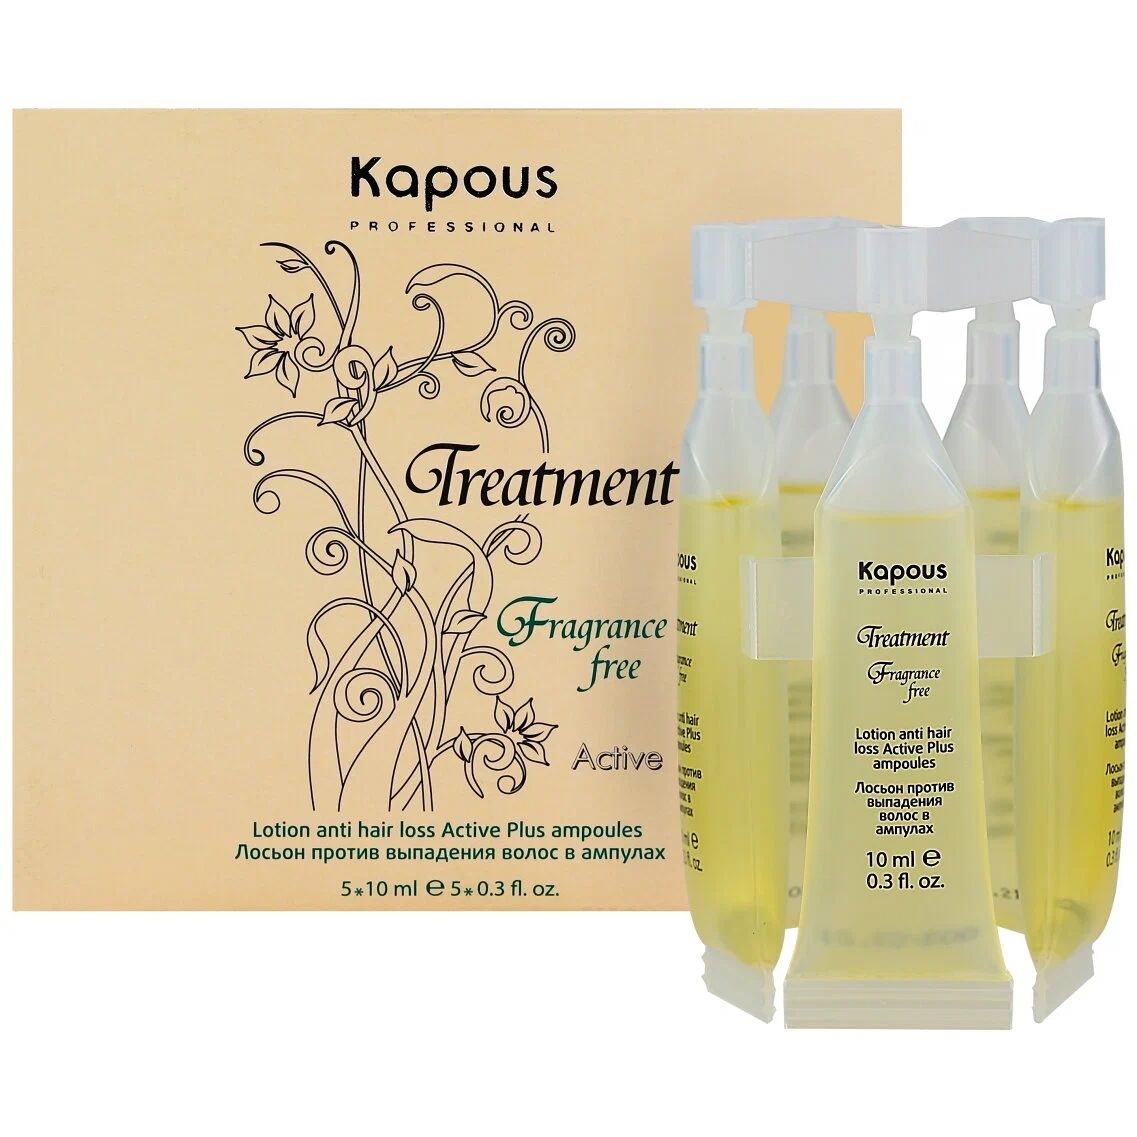 Лосьон для волос Kapous Professional Treatment Fragrance free в ампулах 5х10 мл лосьон против жирной перхоти в ампулах bioactive treatment